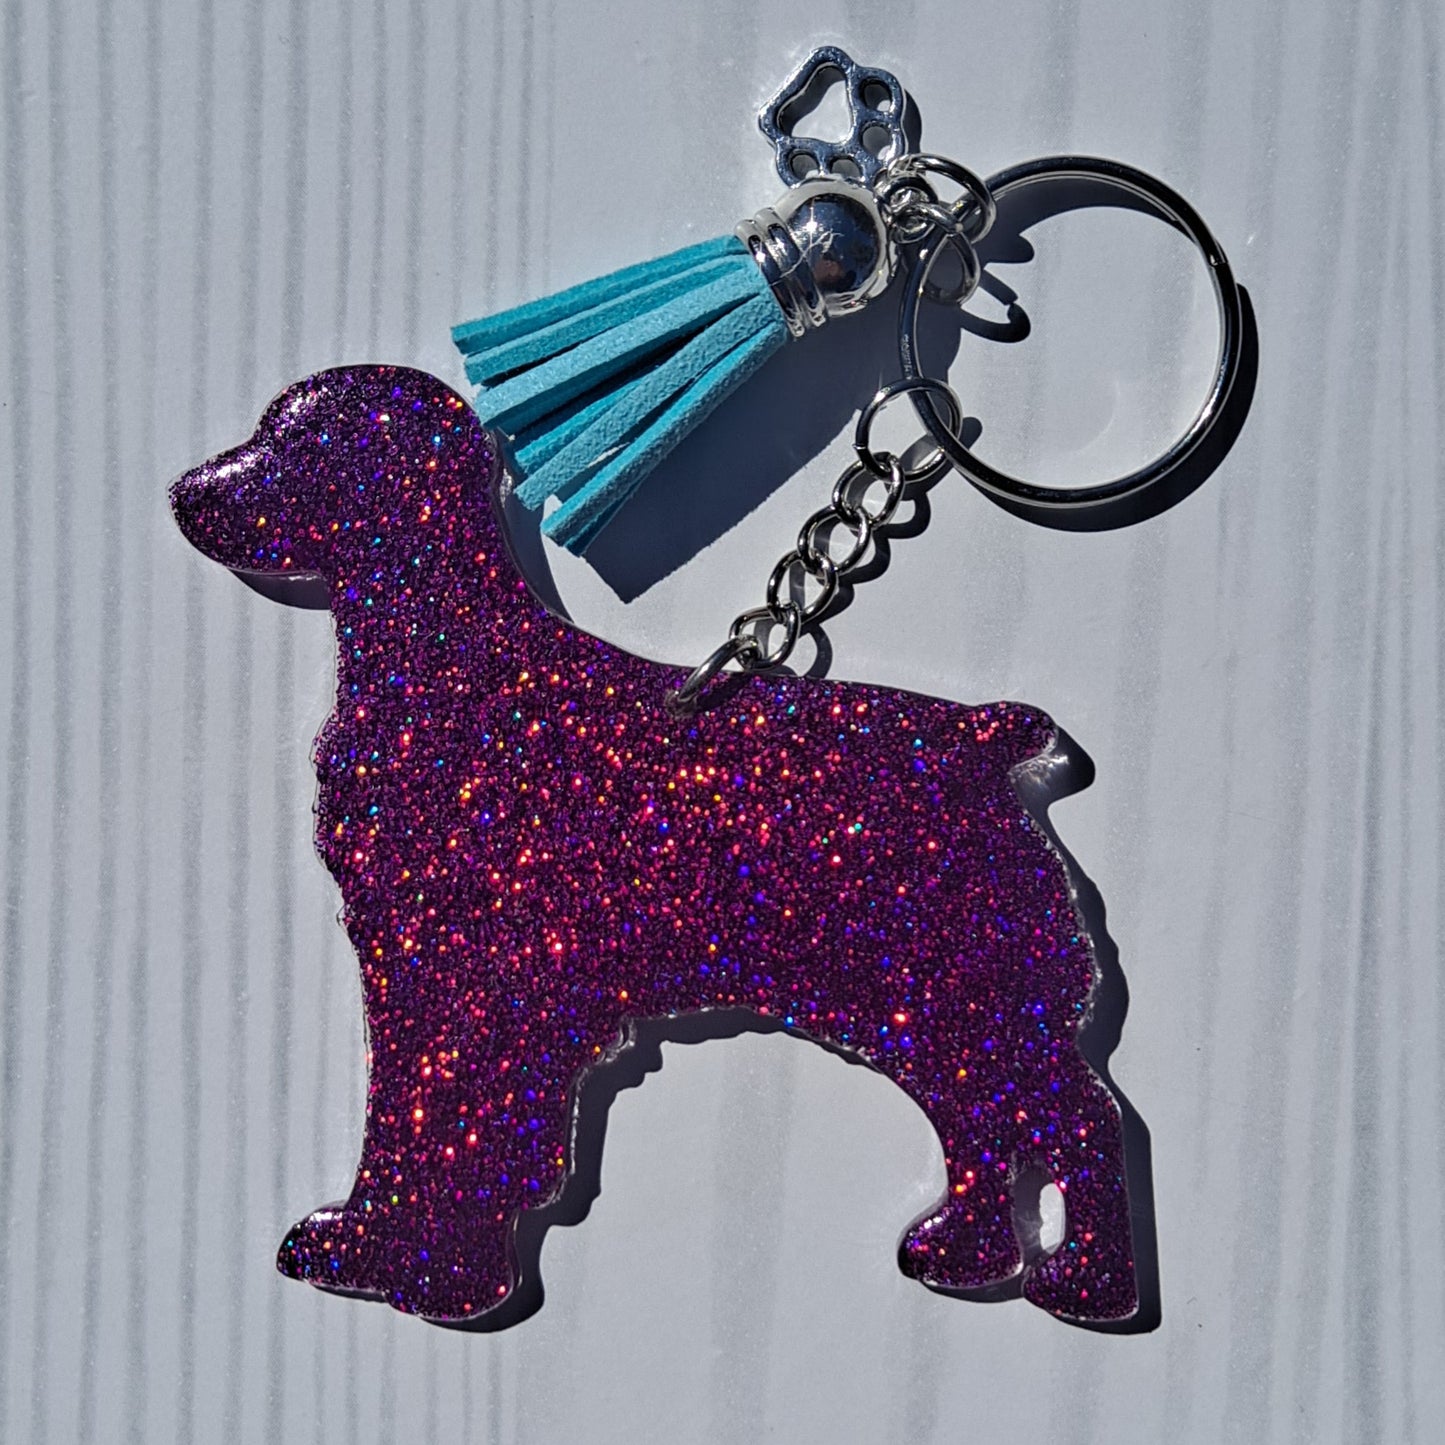 Custom Brittany Spaniel Dog Mama Glitter Keychain.